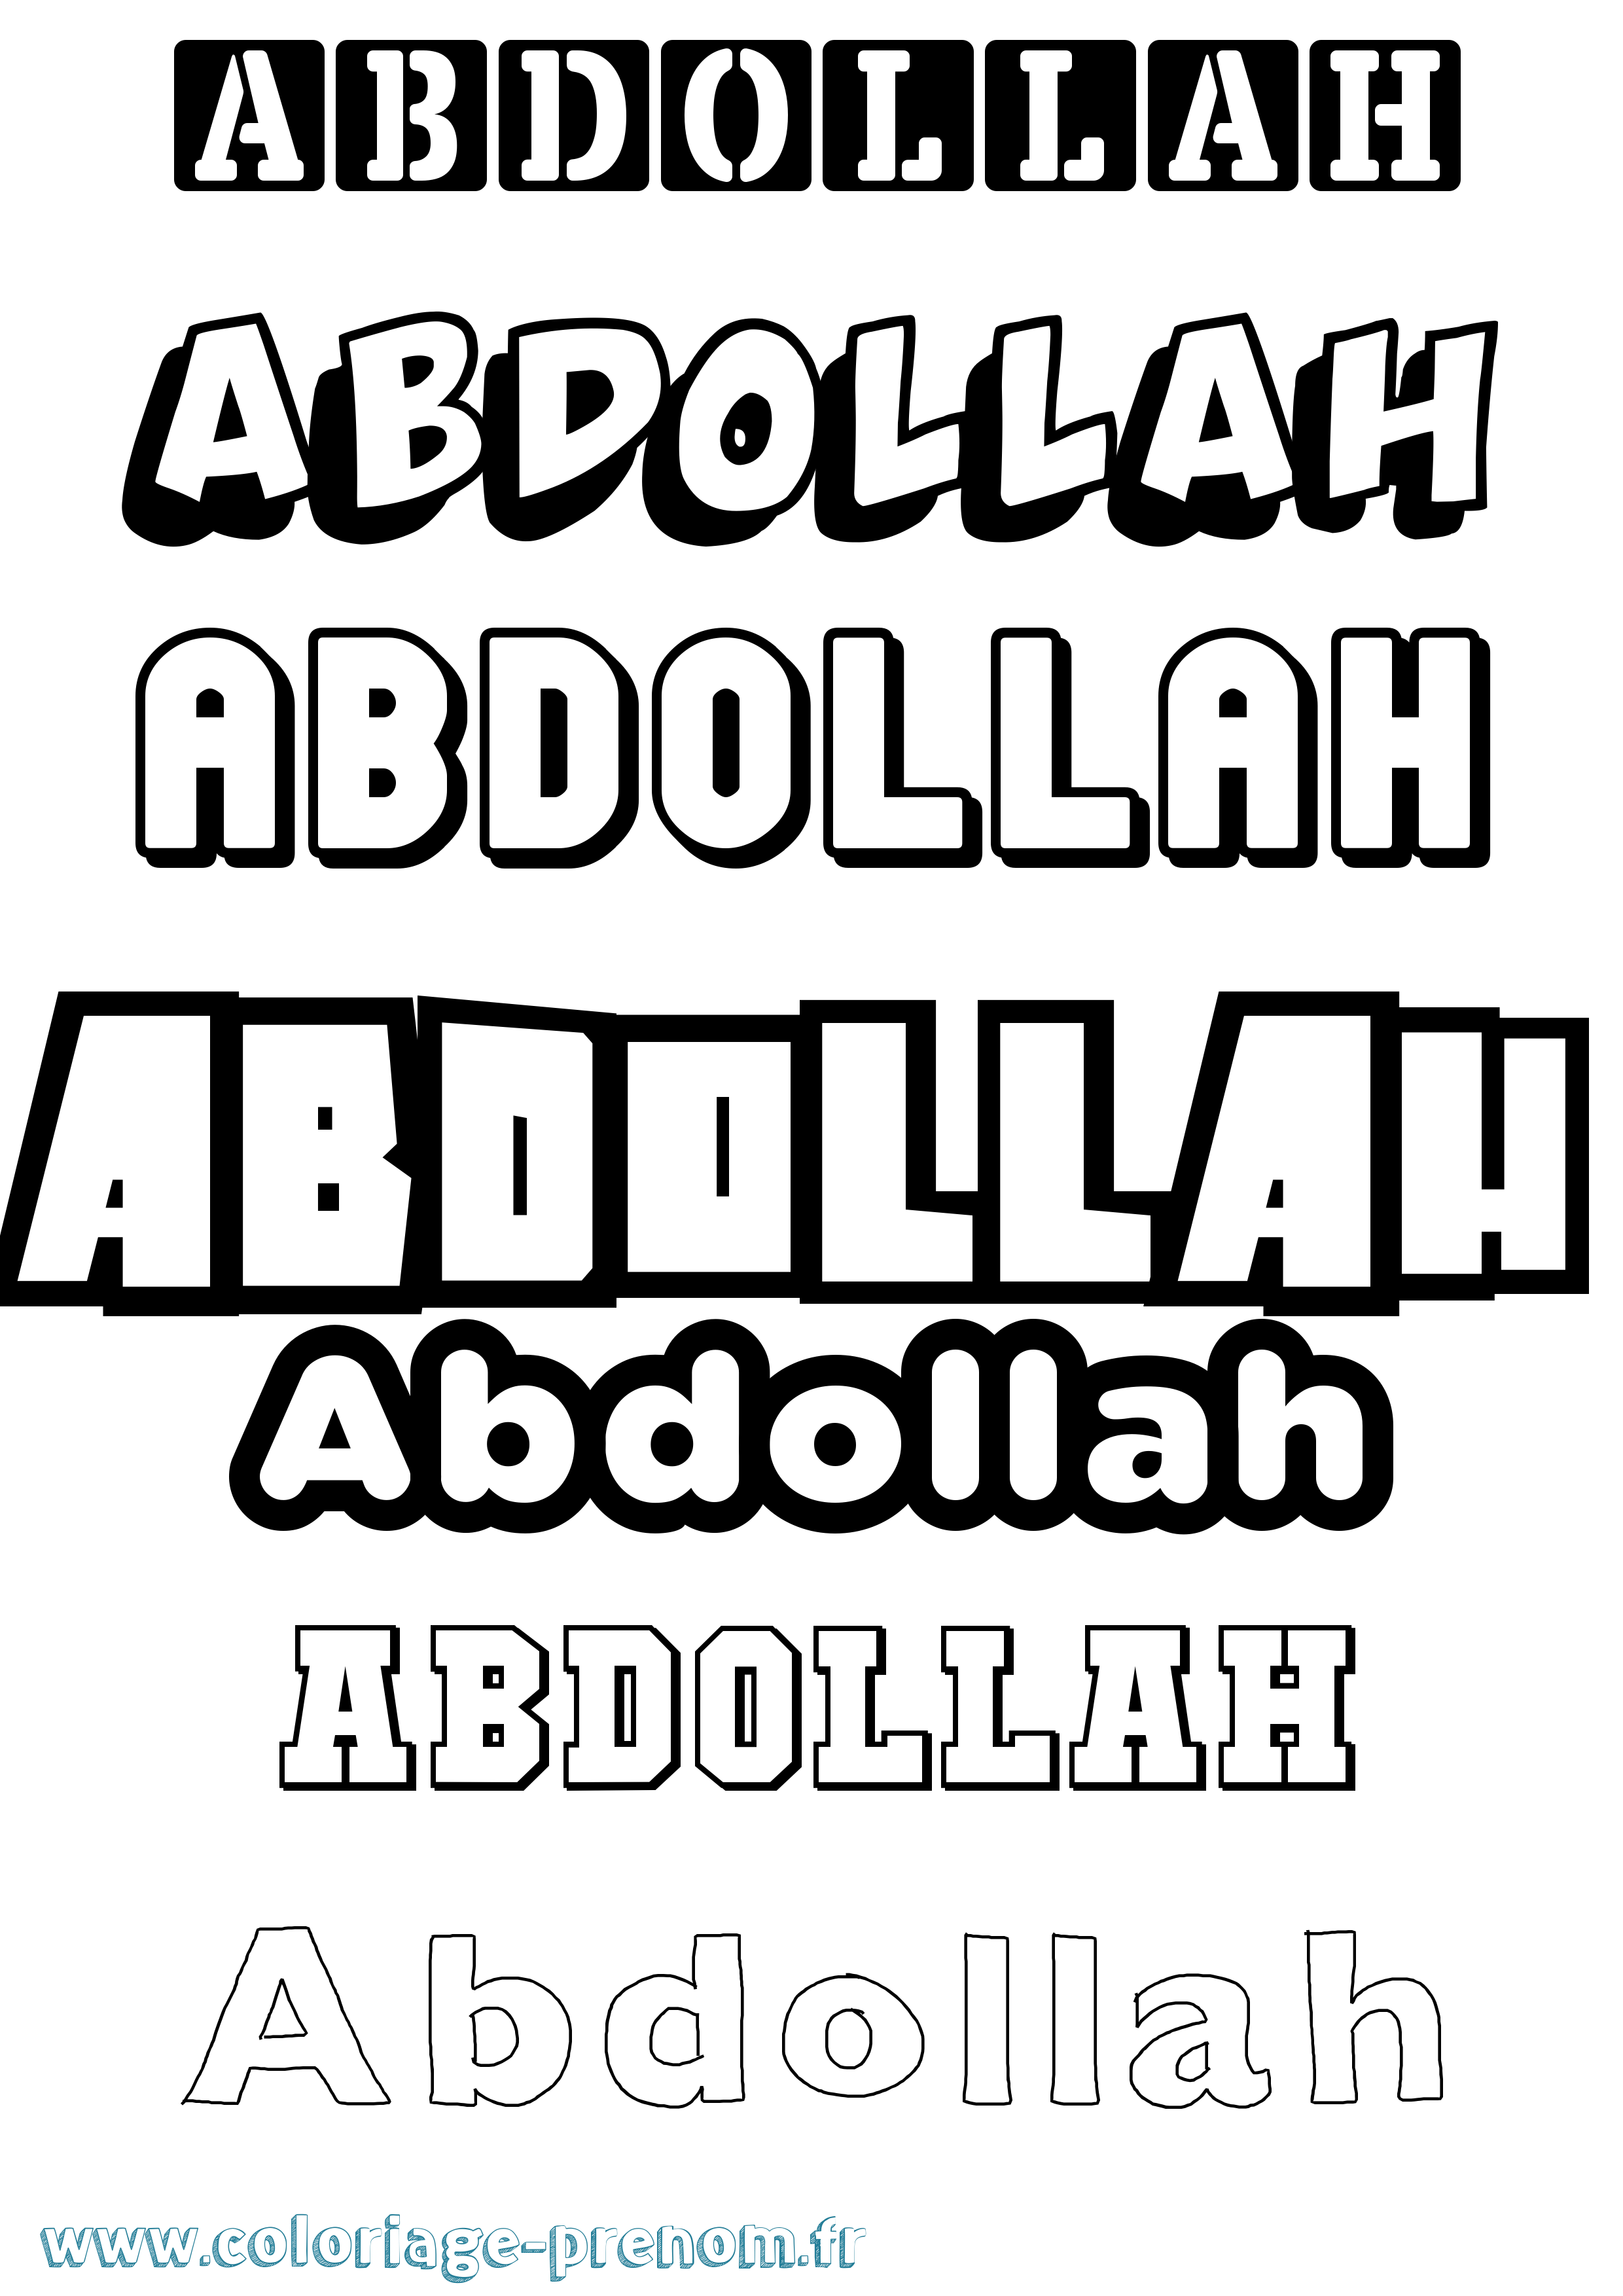 Coloriage prénom Abdollah Simple